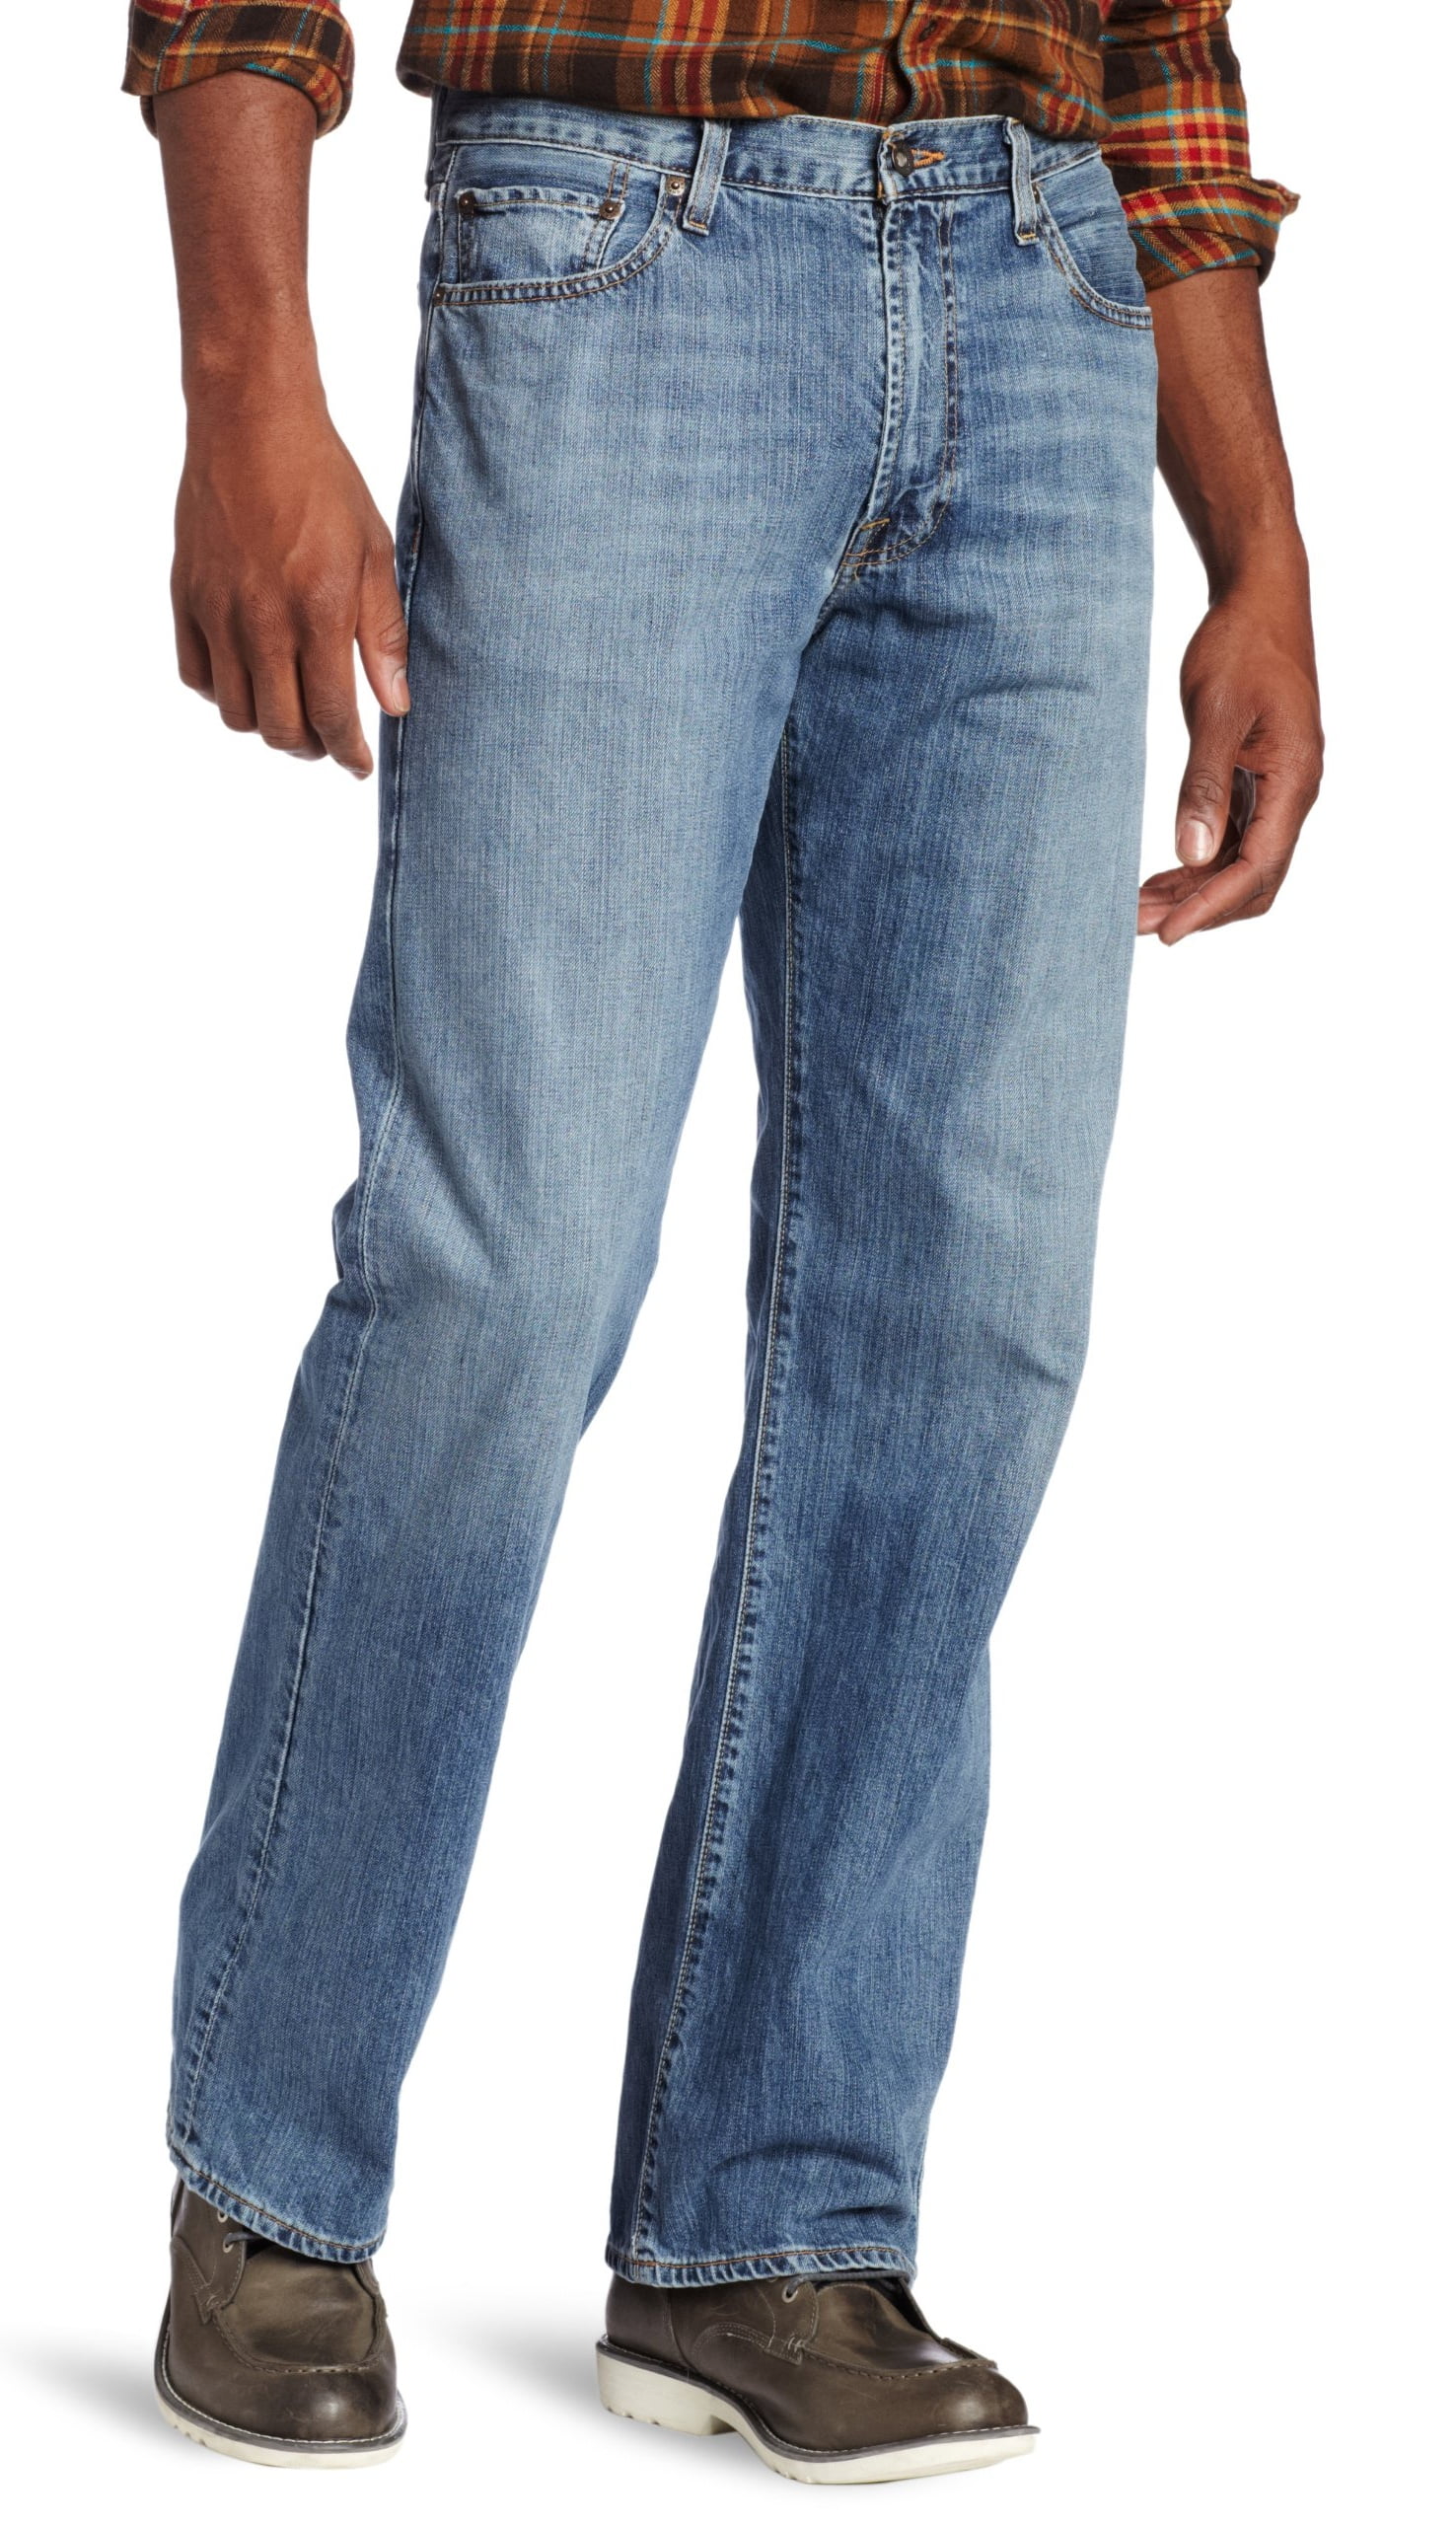 cardiff jeans price